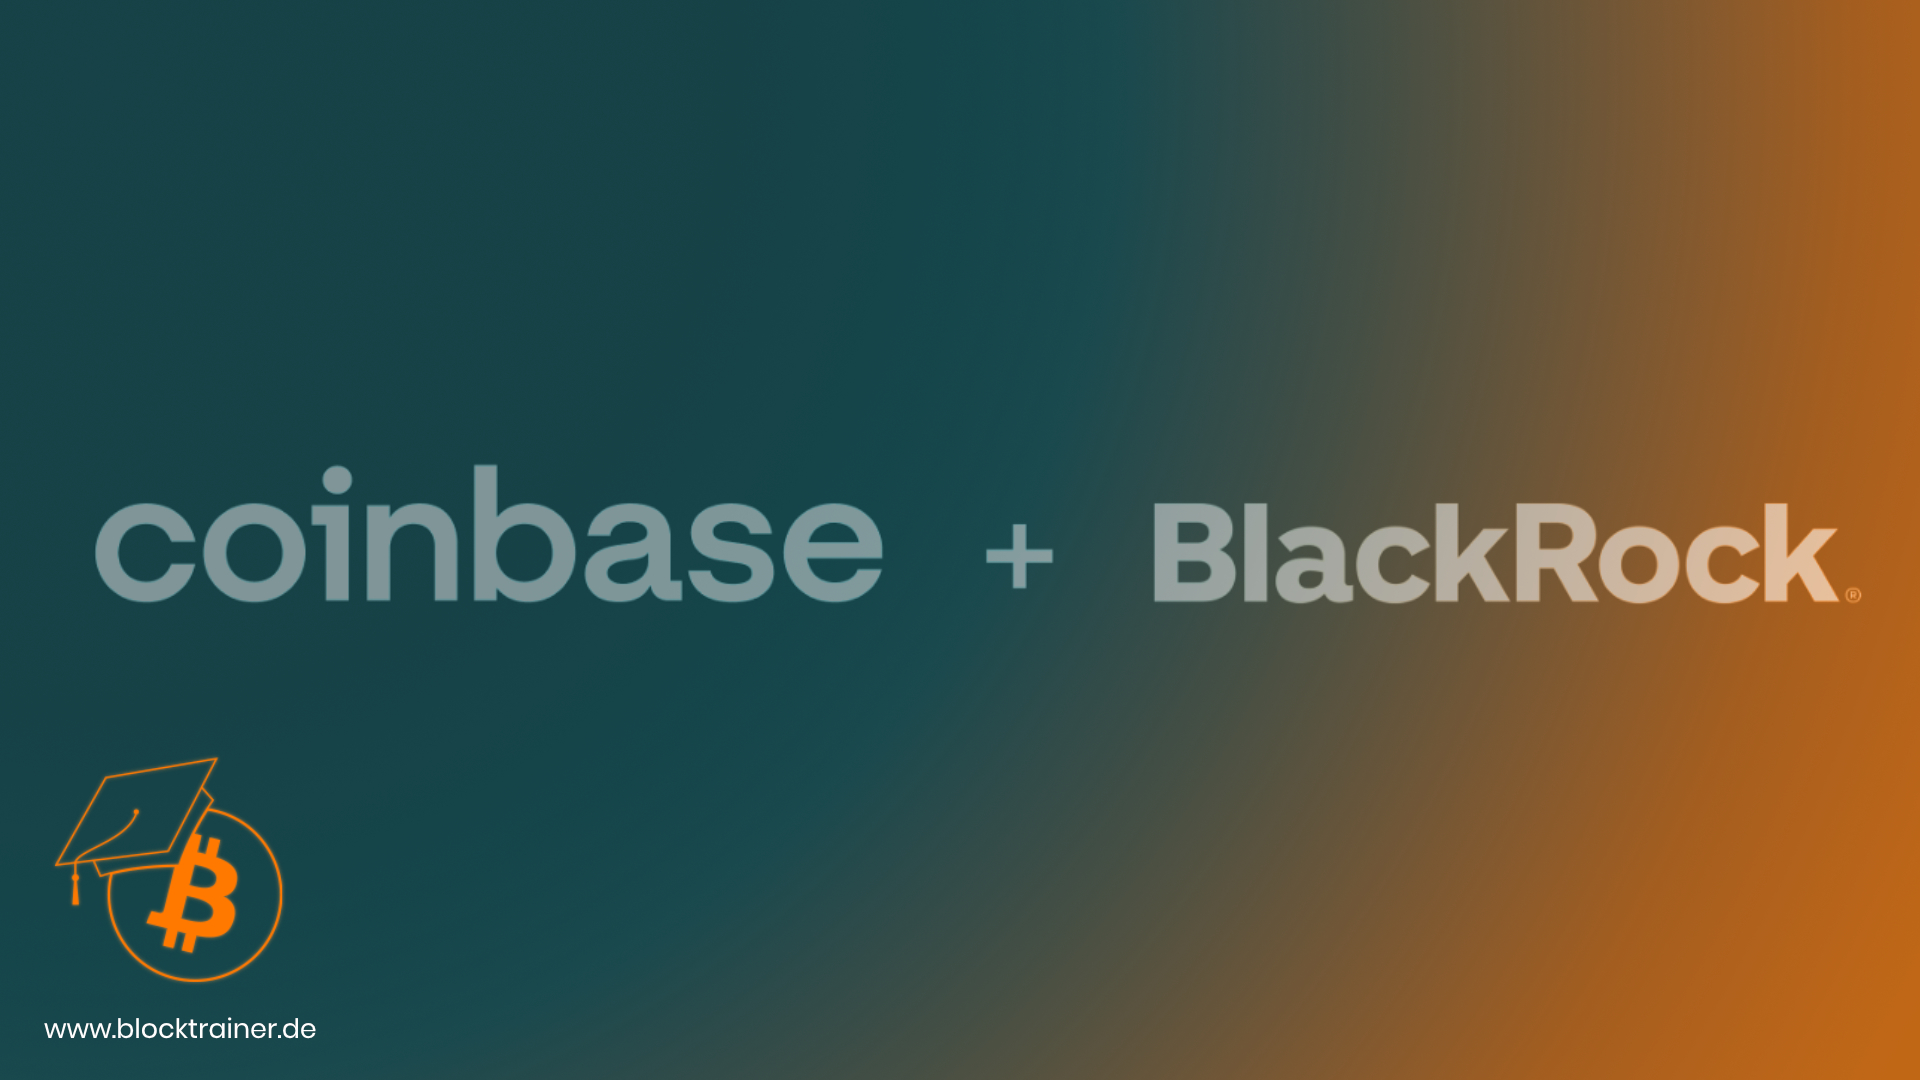 BlackRock Coinbase